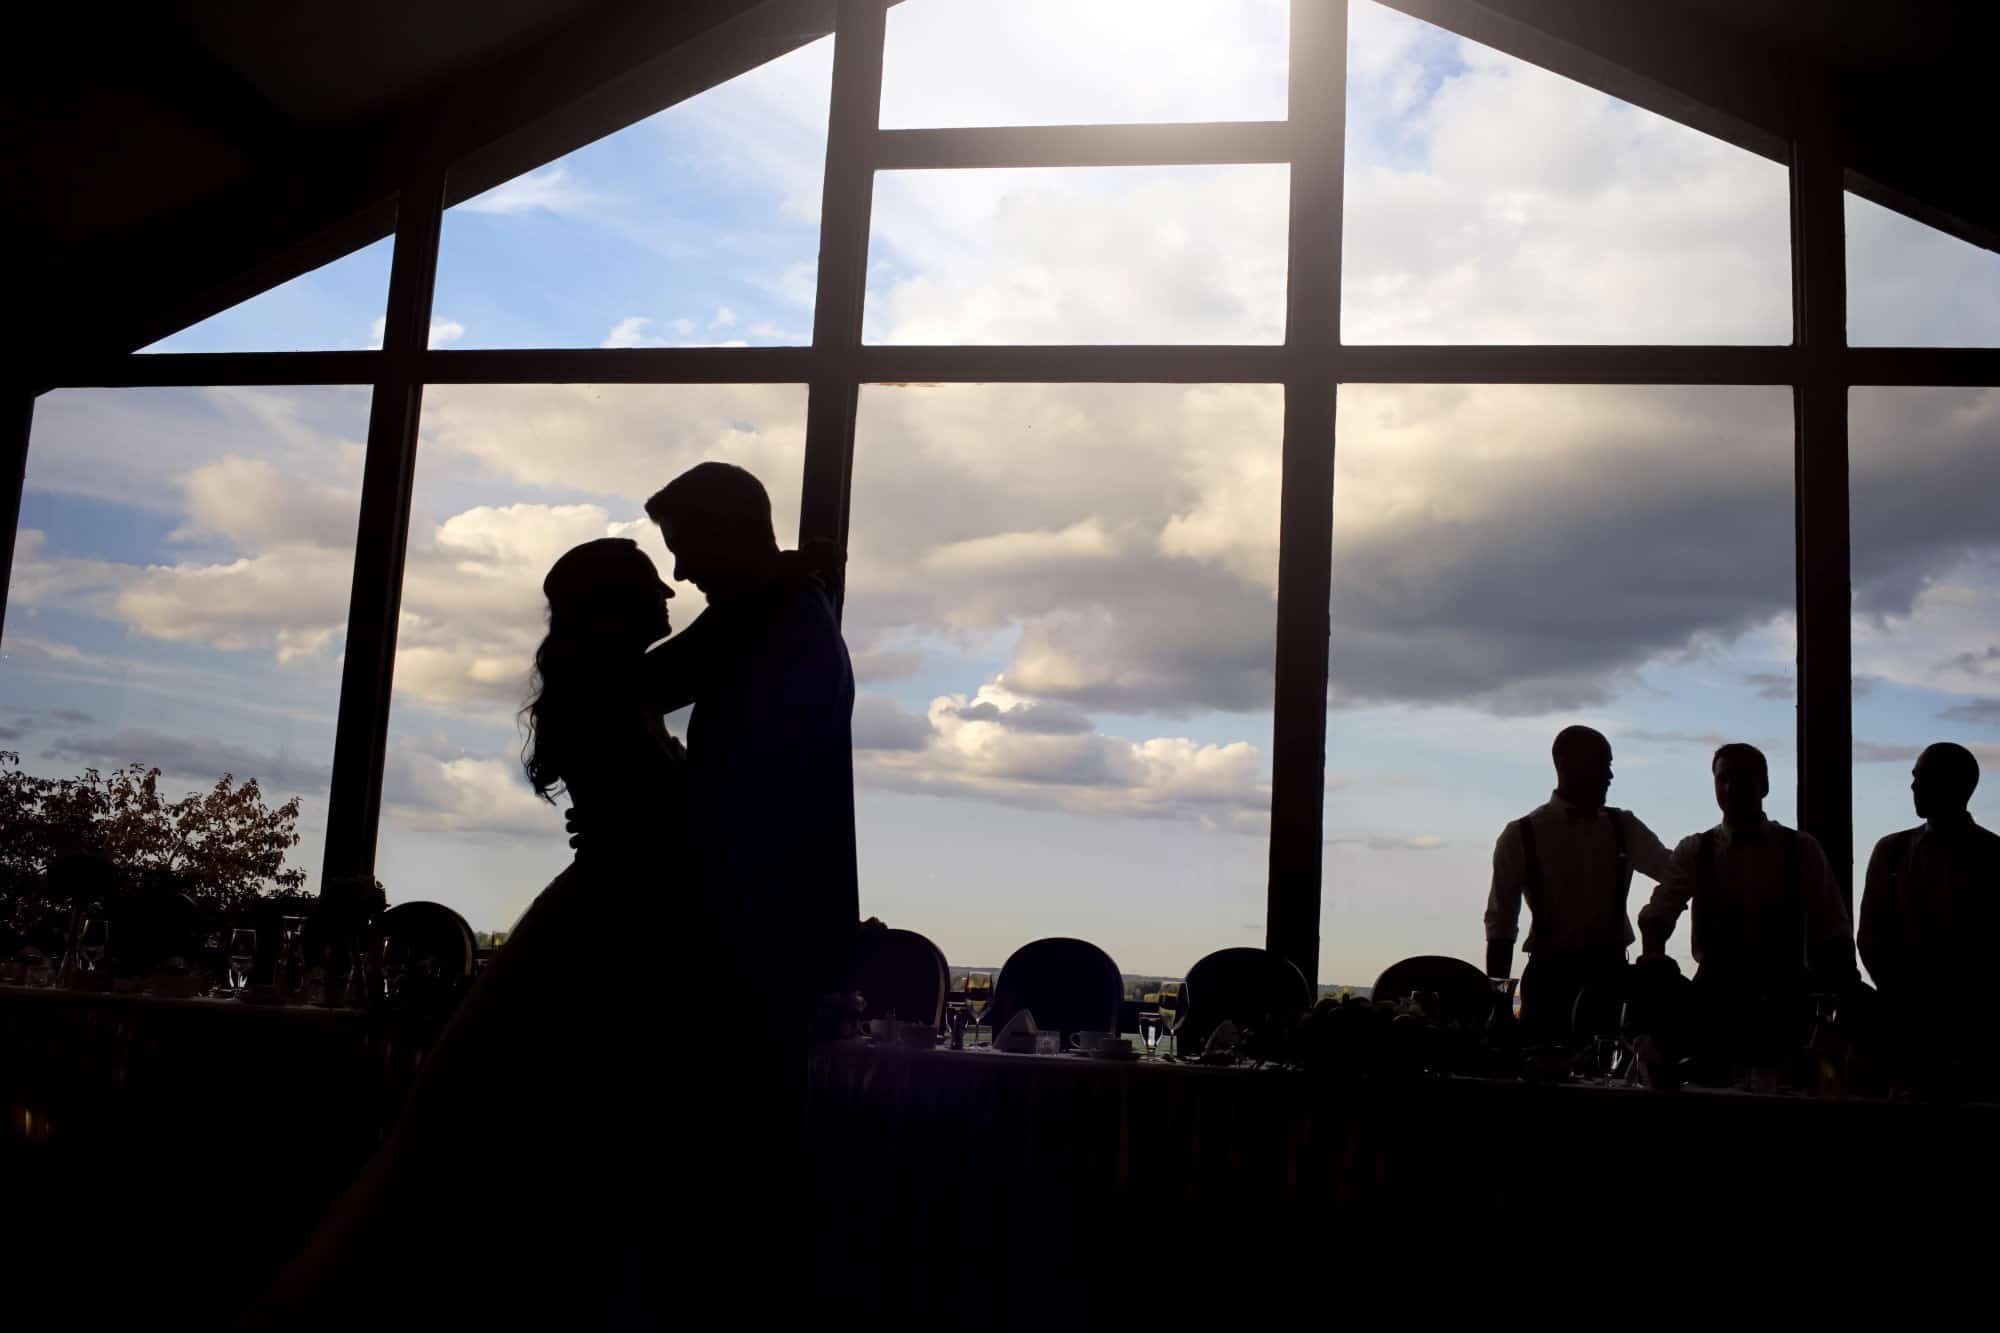 vanessa louis-pierre CLUB DE GOLF WINDMILL HEIGHTS first dance reception Portuguese Canadian wedding silhouettes